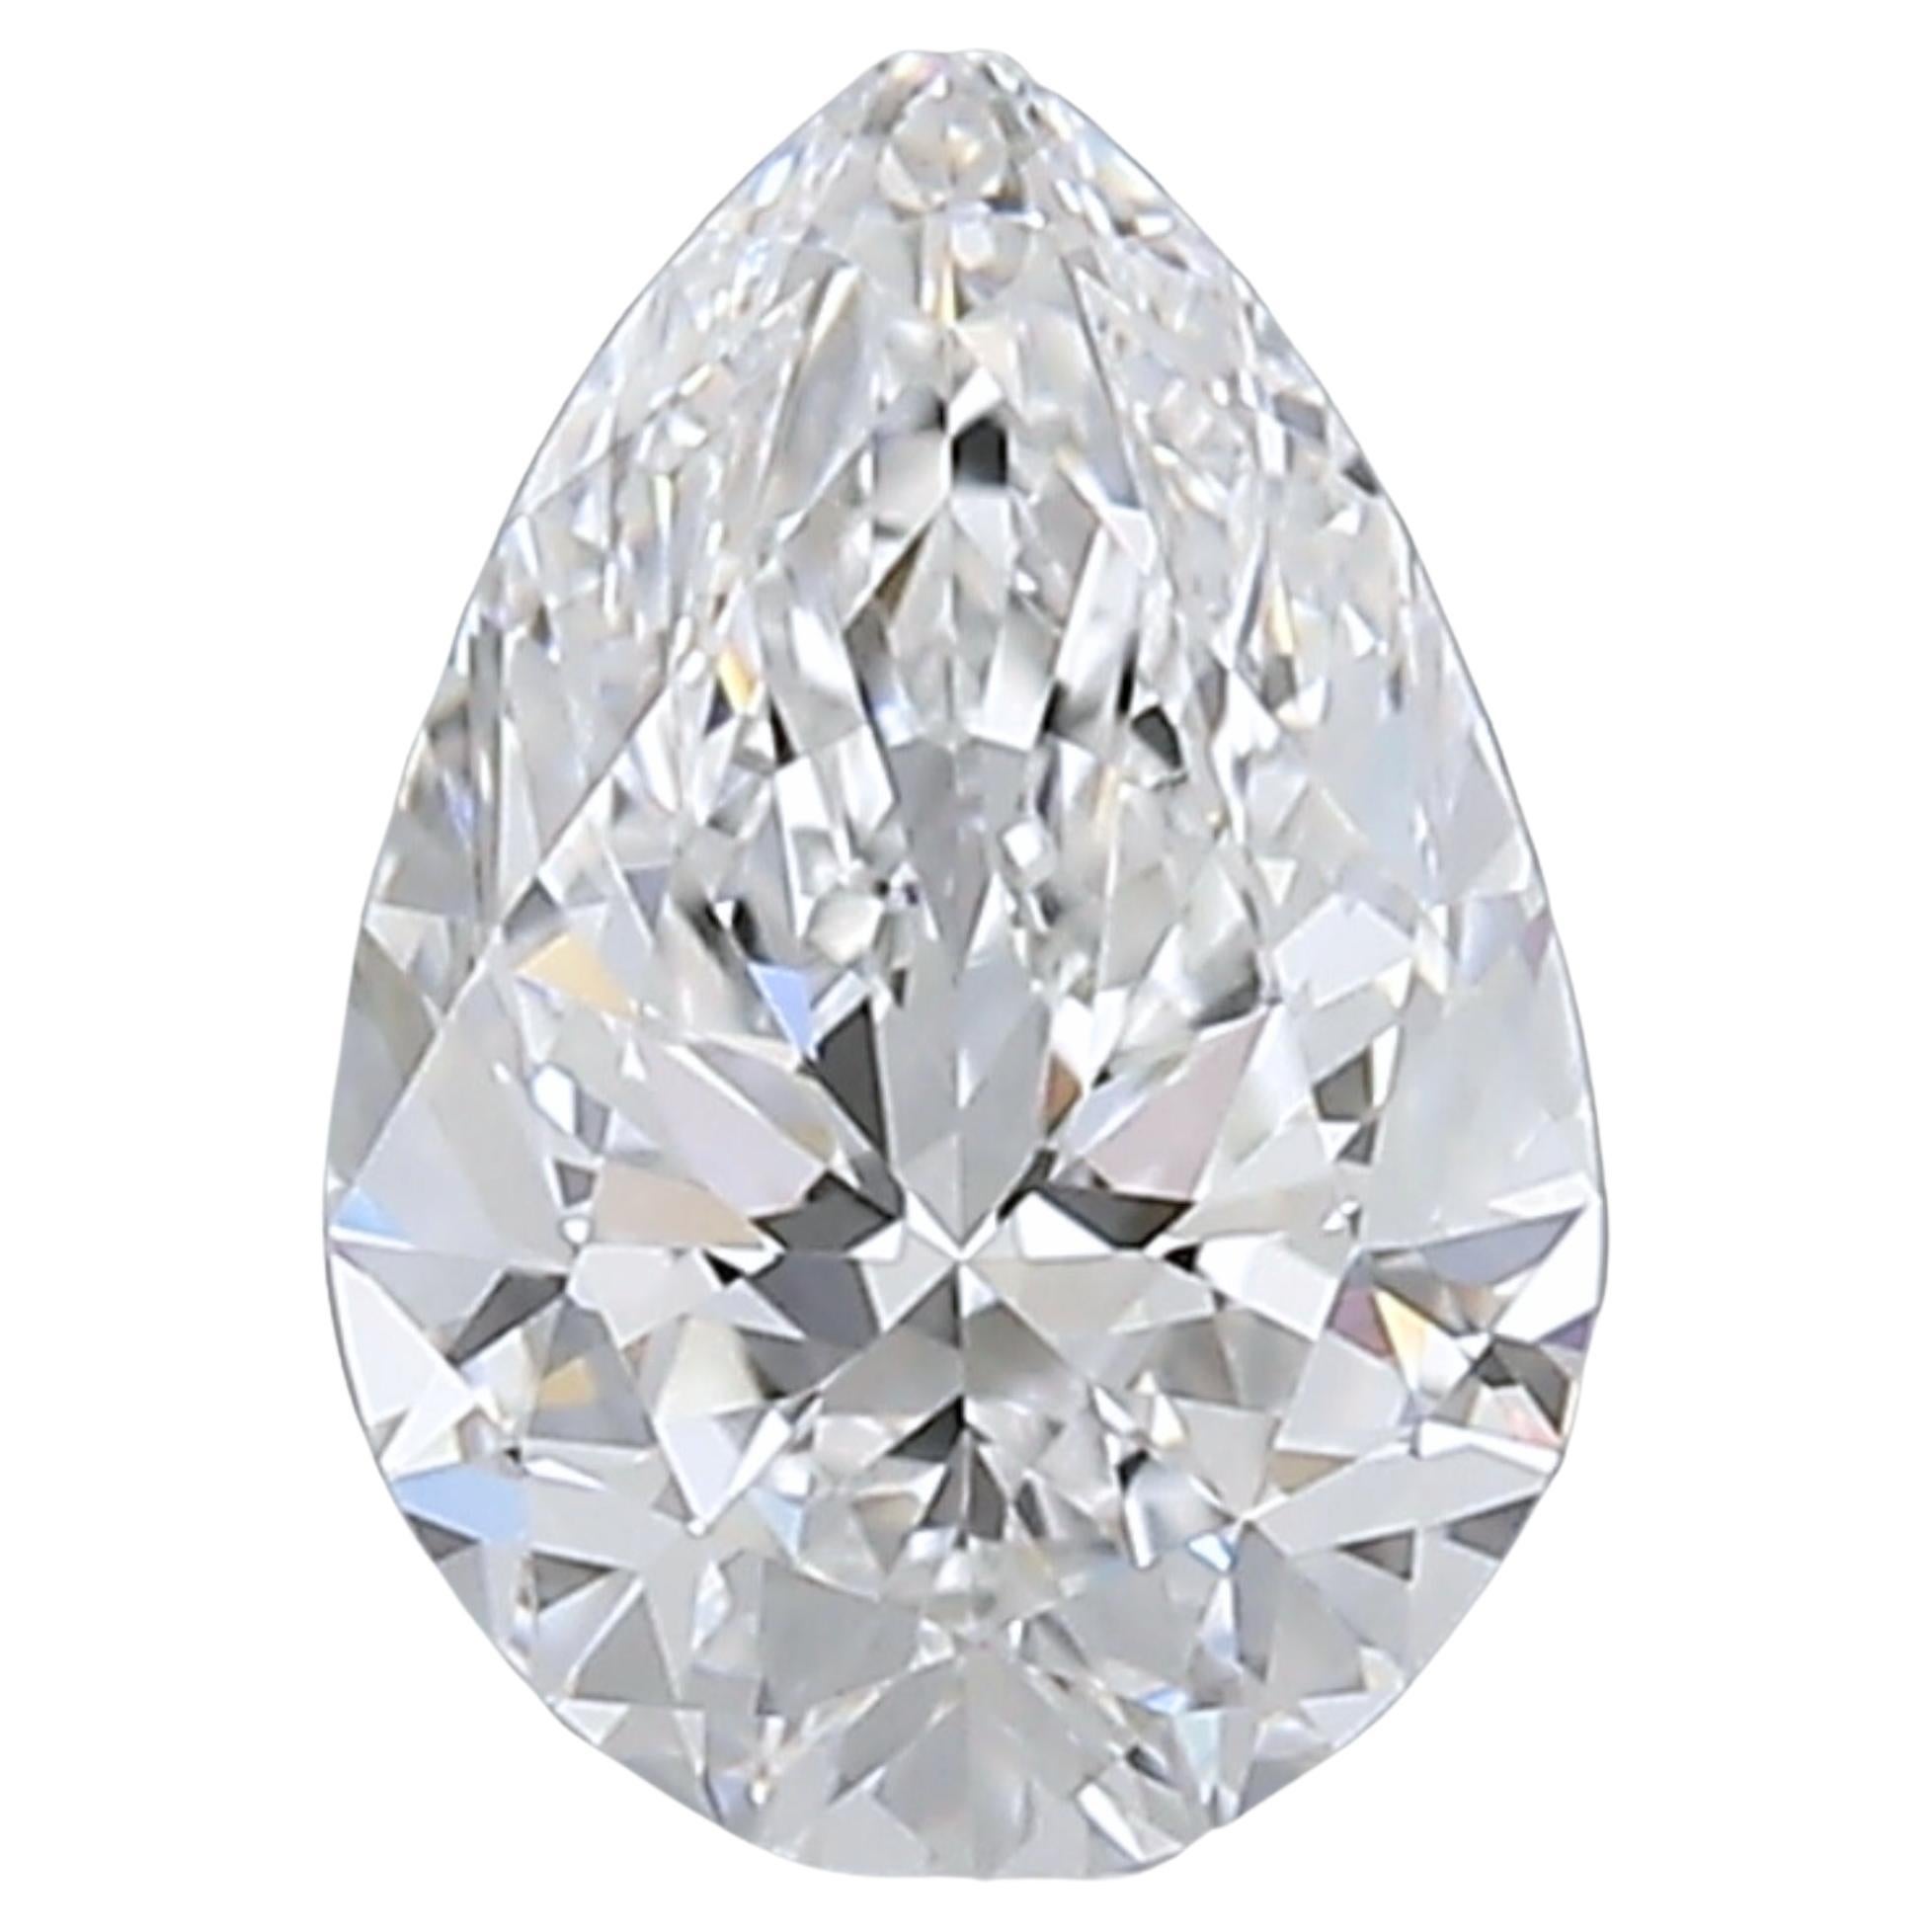 Sparkling 0.70 carat Pear Cut Brilliant Diamond